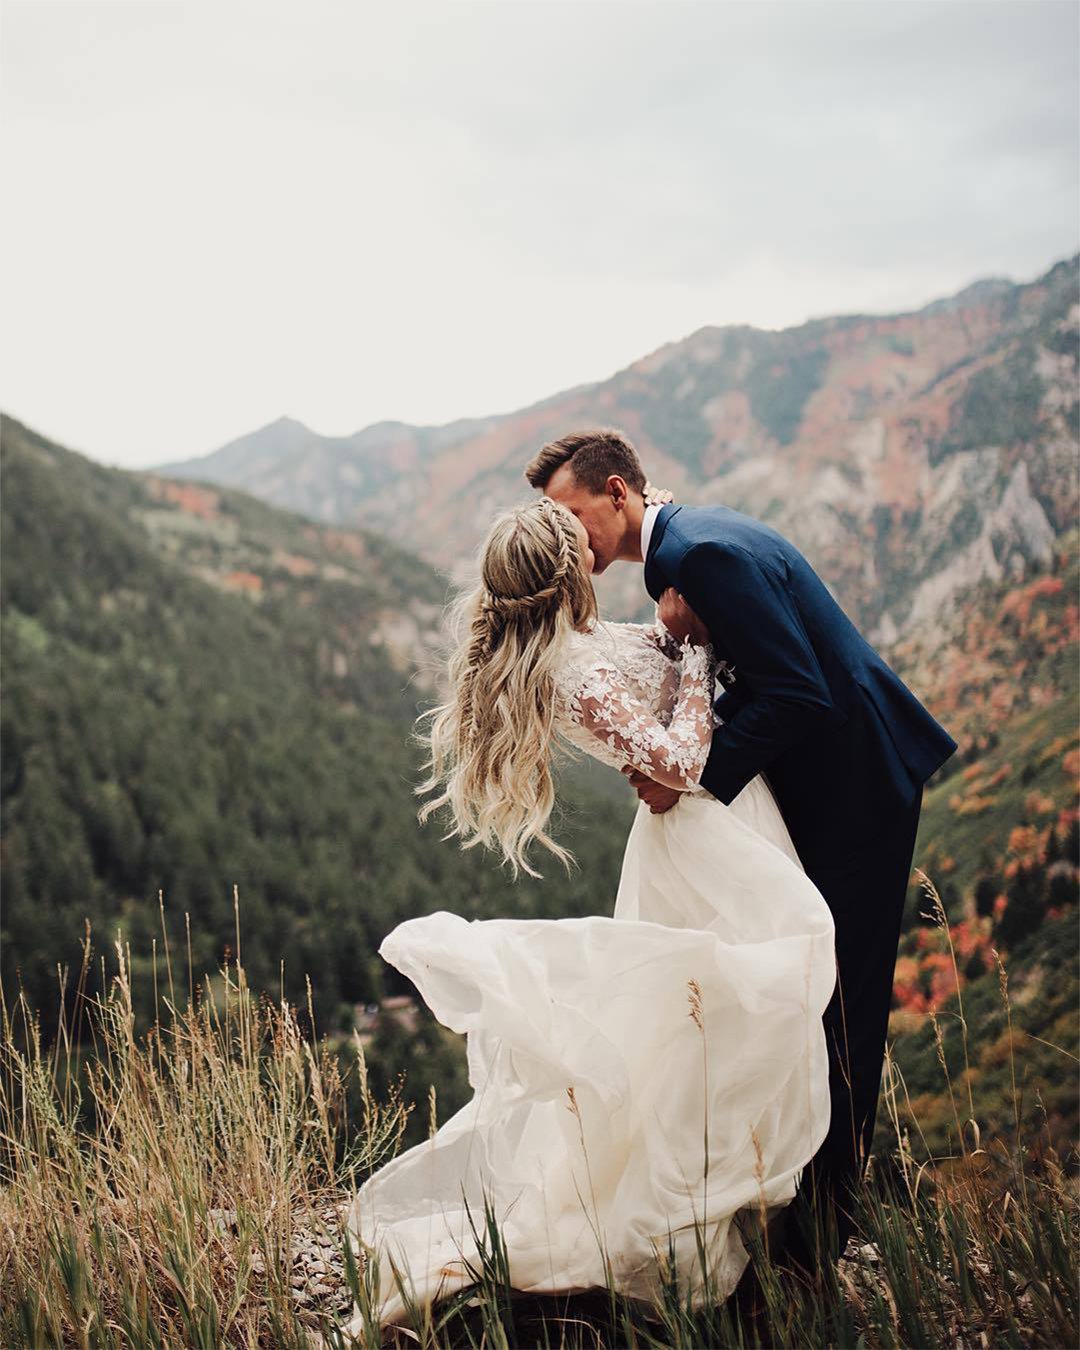 wedding photo ideas windy wedding day in mountains kissing sden strader